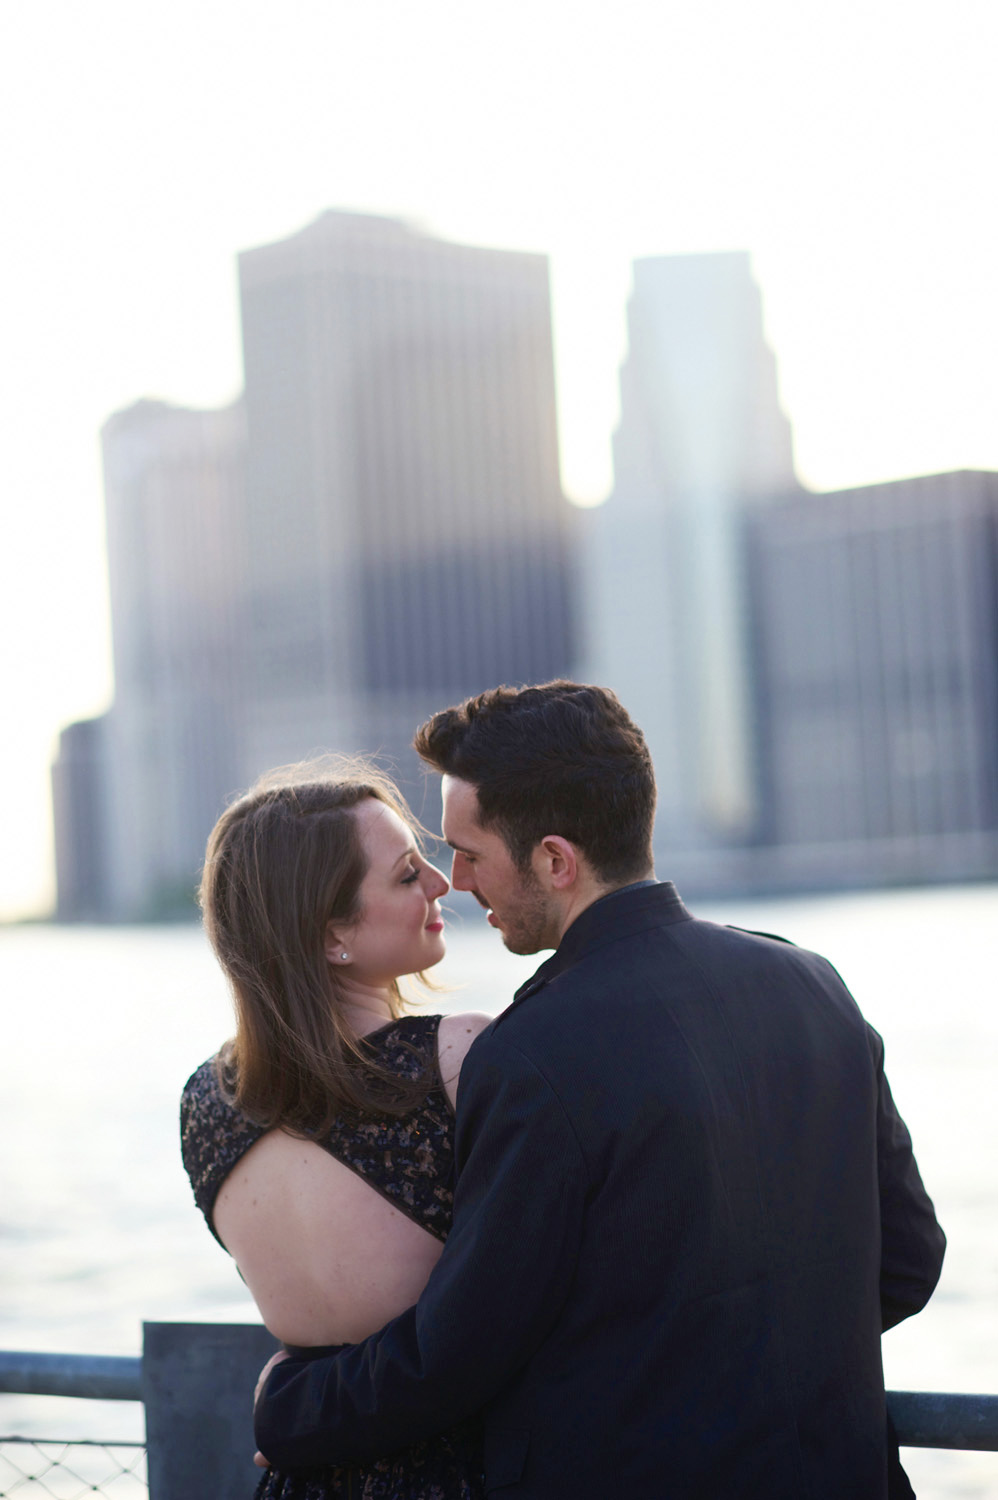 Engagement photos taken in Brooklyn near the Brooklyn Bridge by Brooklyn Wedding Photographer XOANDREA